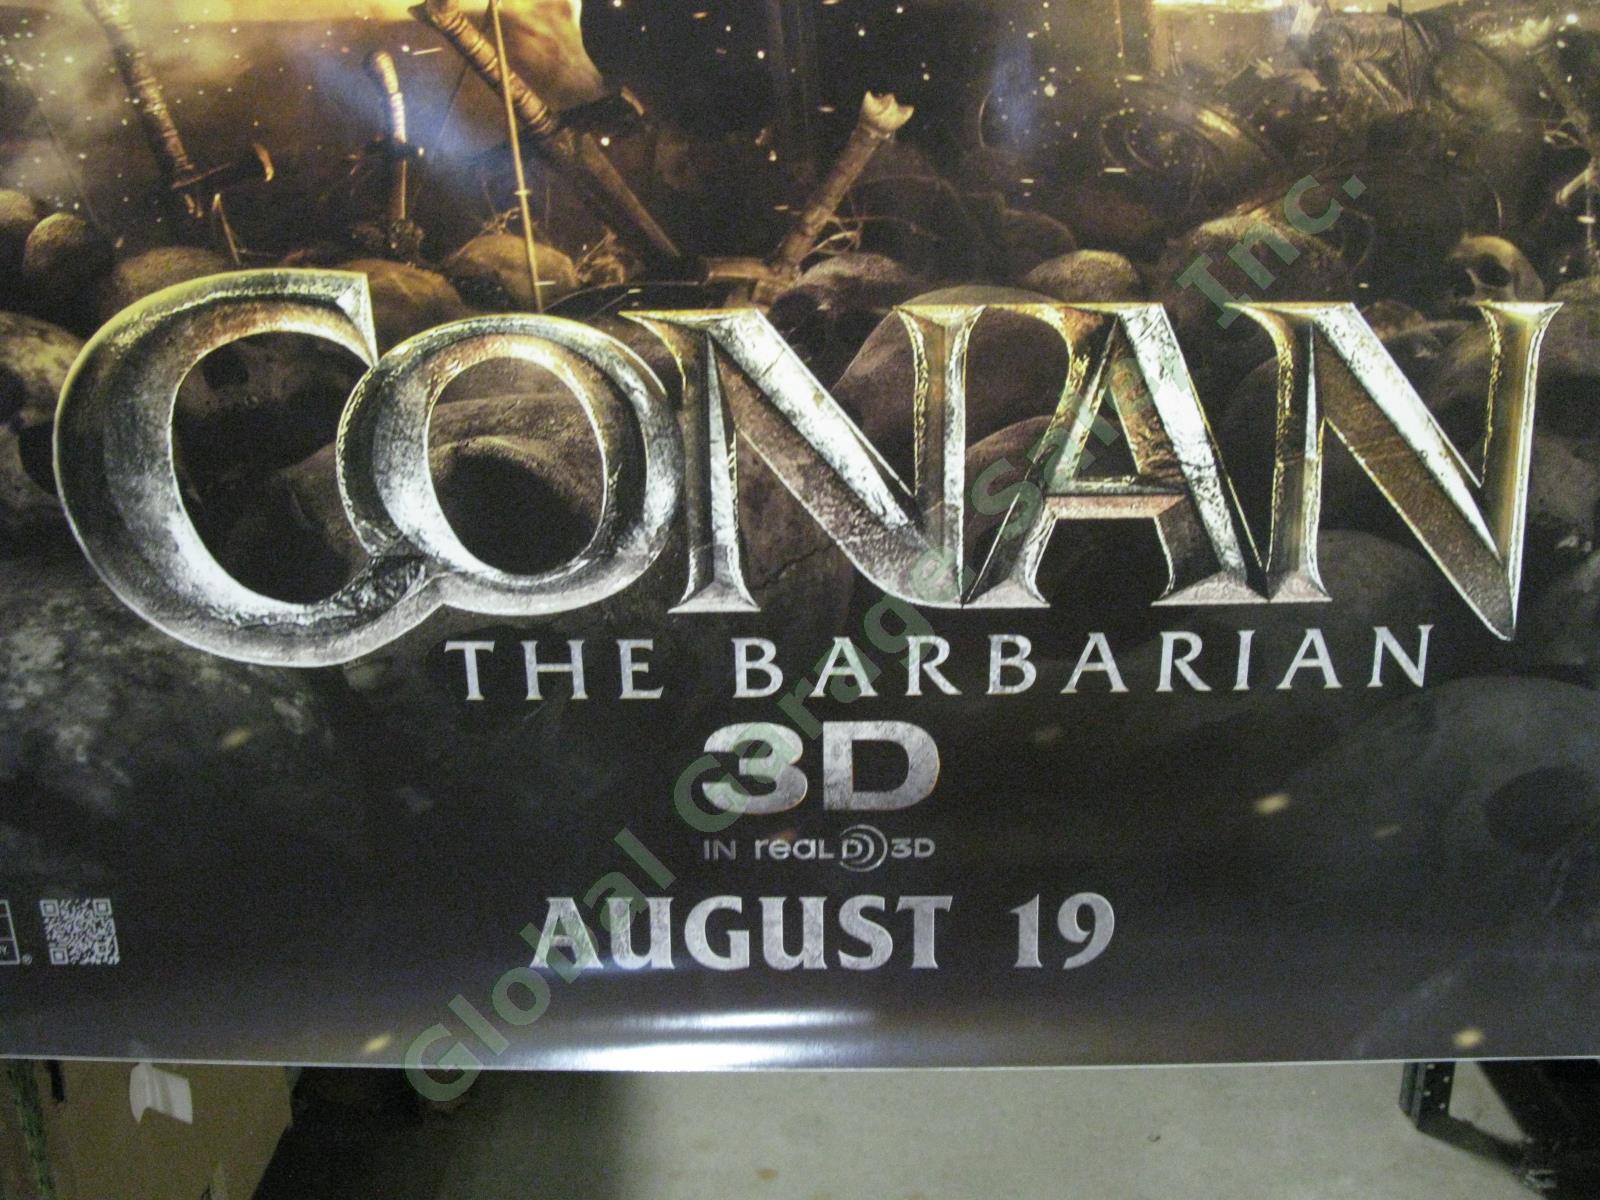 Conan The Barbarian Original Movie Theater Window Decal Vinyl Banner Jason Momoa 2